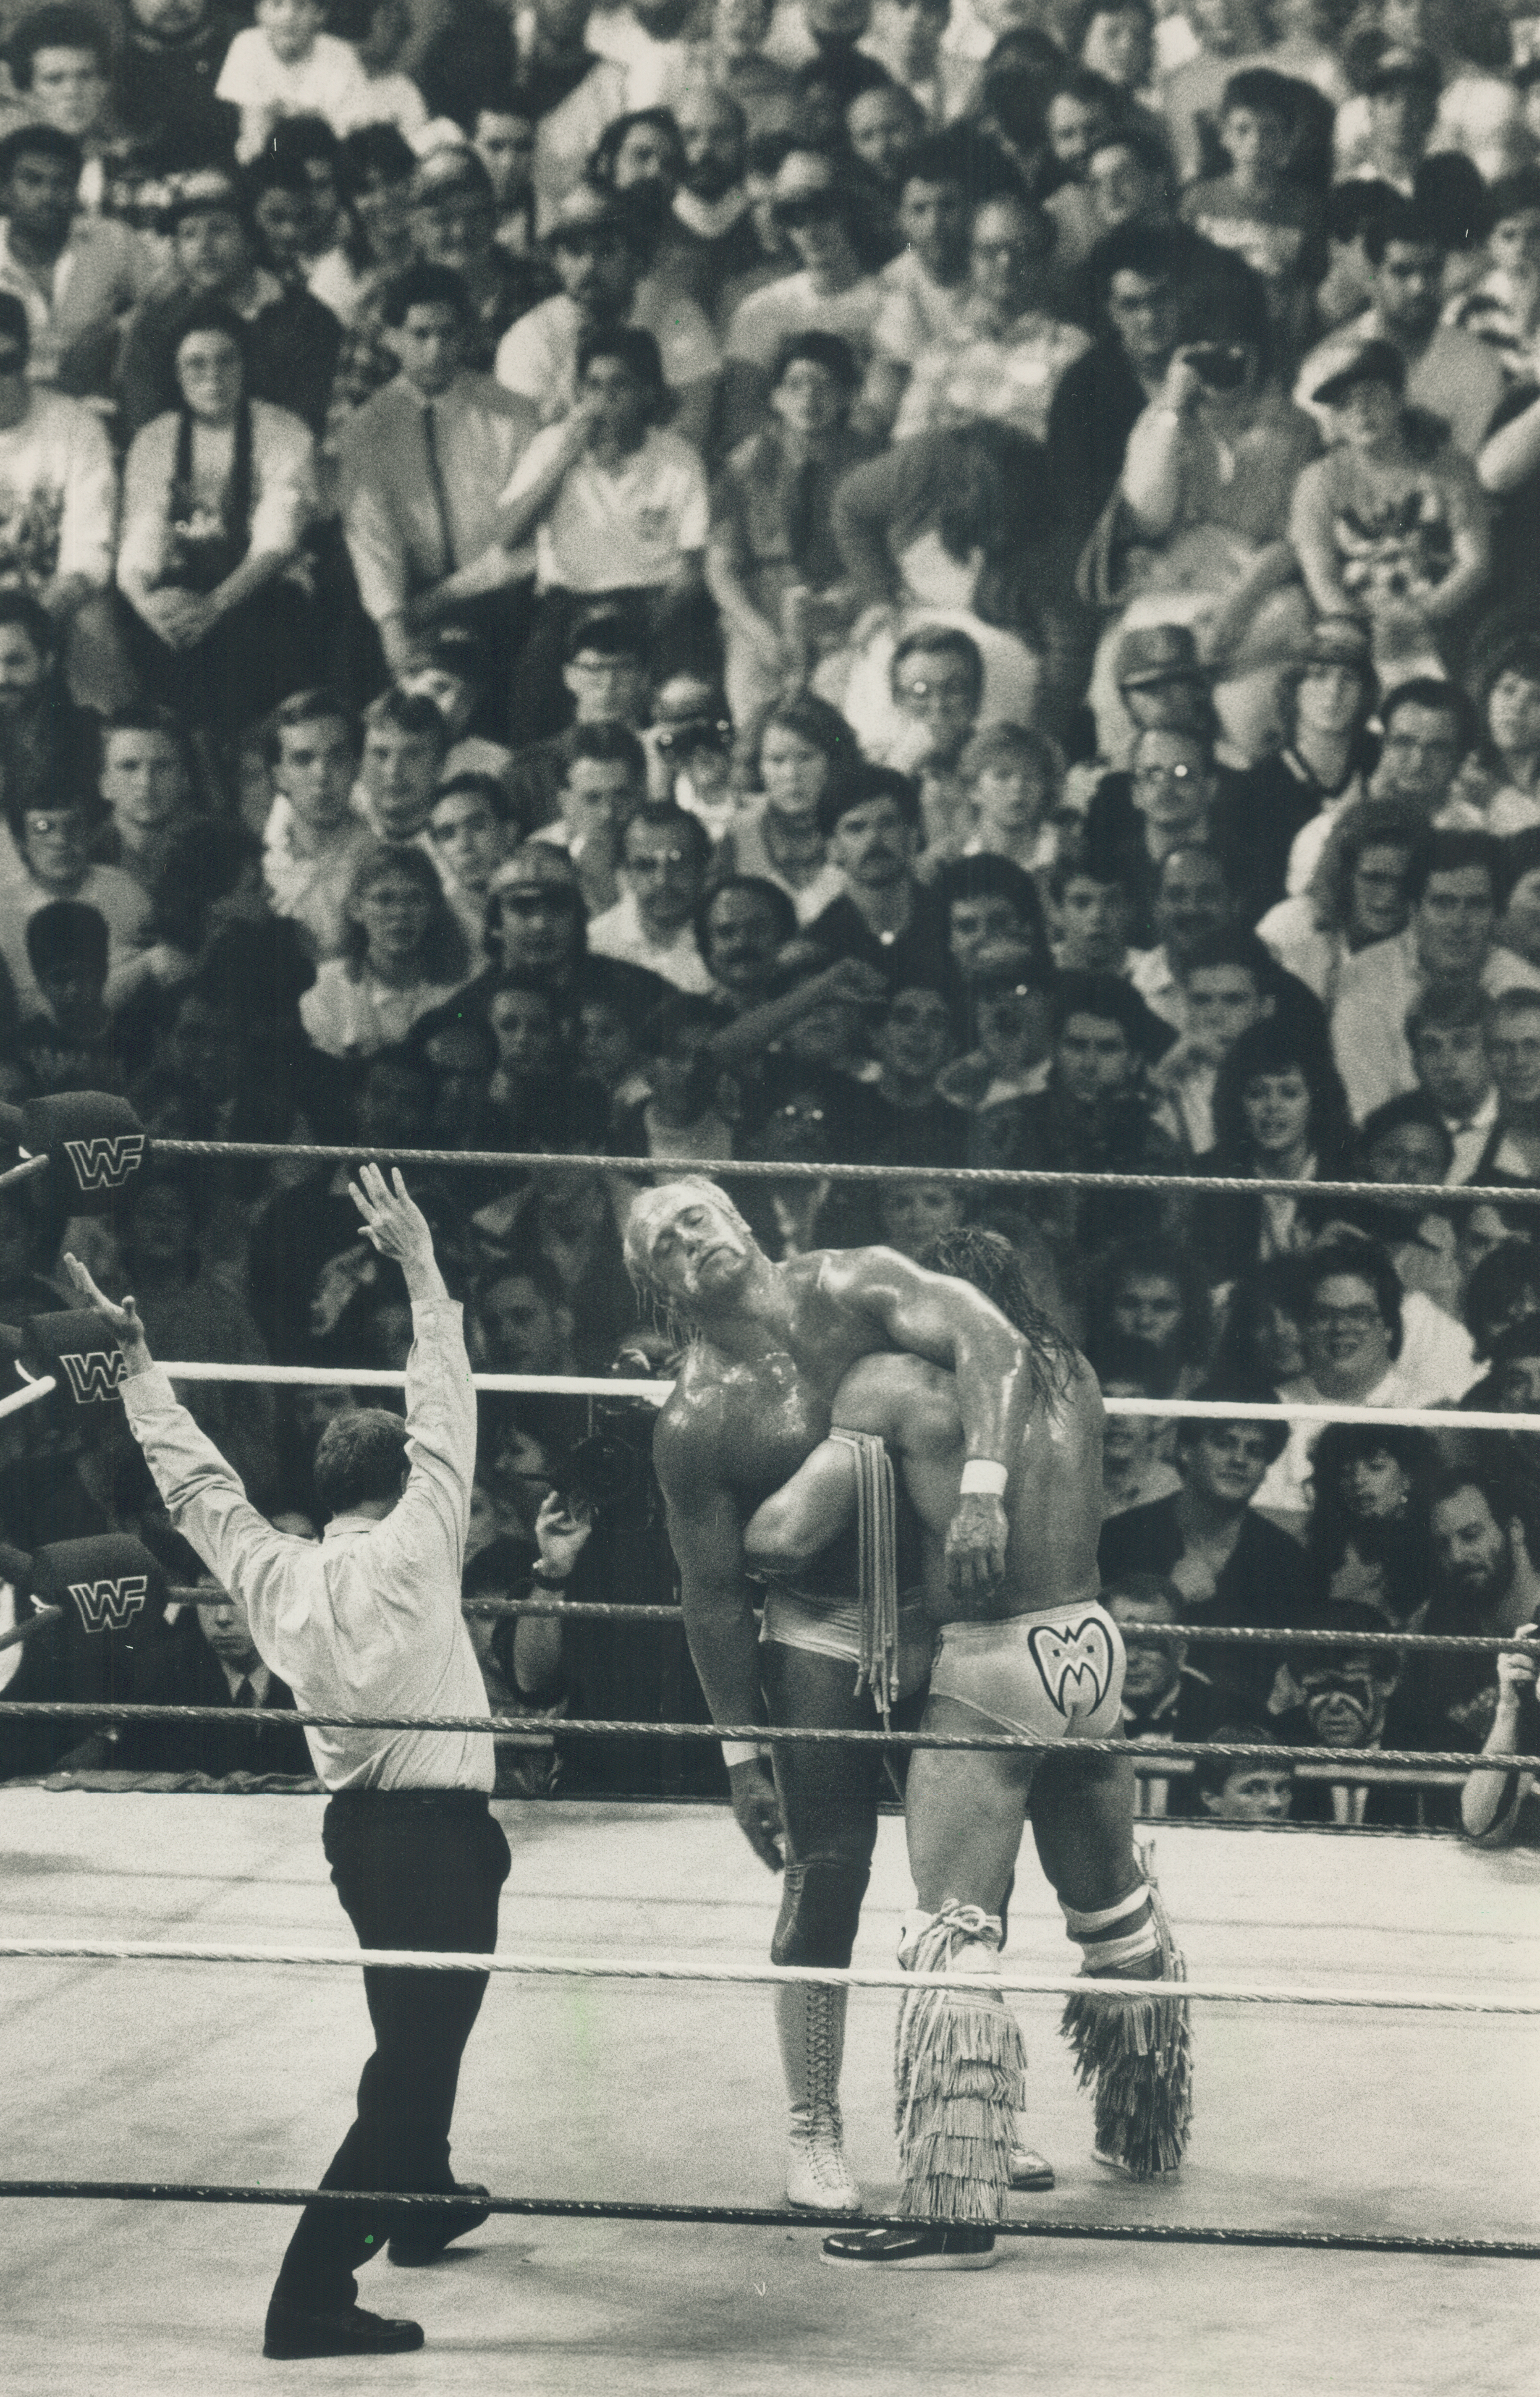 Ultimate Warrior vs Hulk Hogan